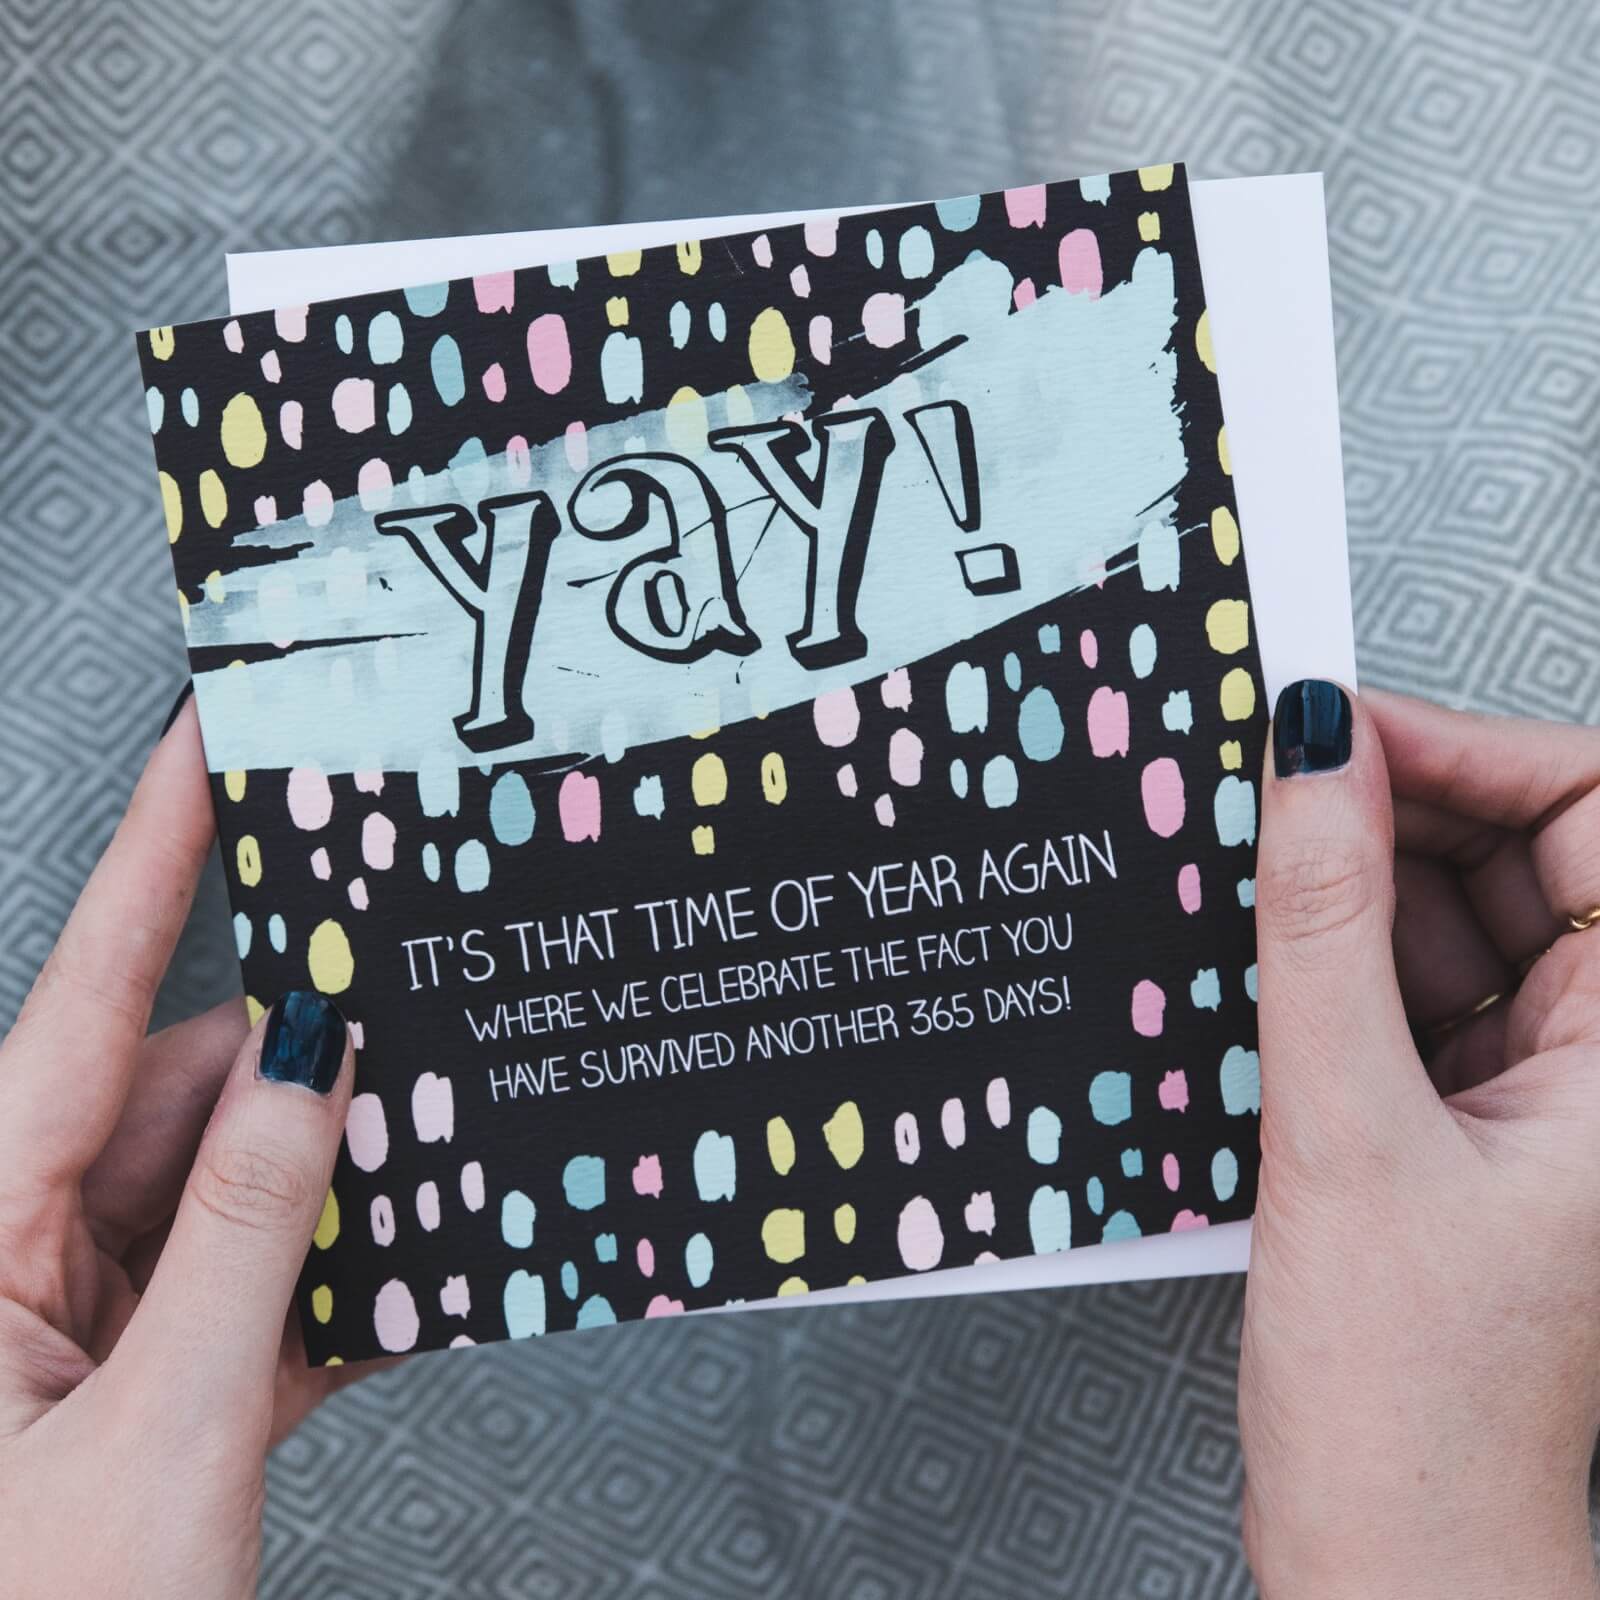 ‘Yay!’ Funny Birthday Card - I am Nat Ltd - Greeting Card